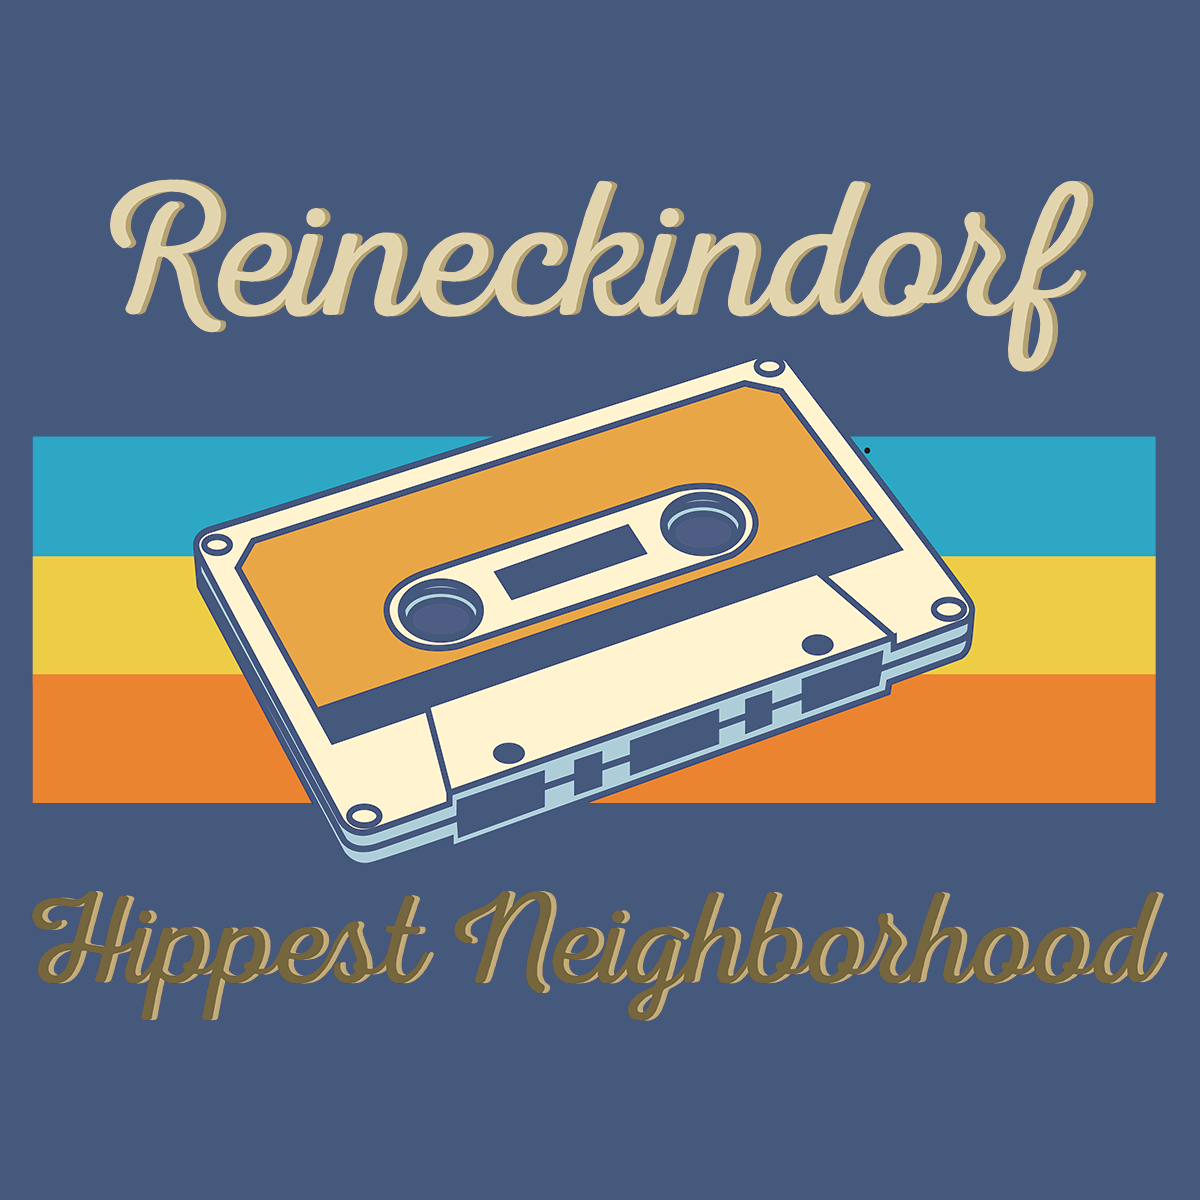 Reinickendorf Hippest Neighborhood